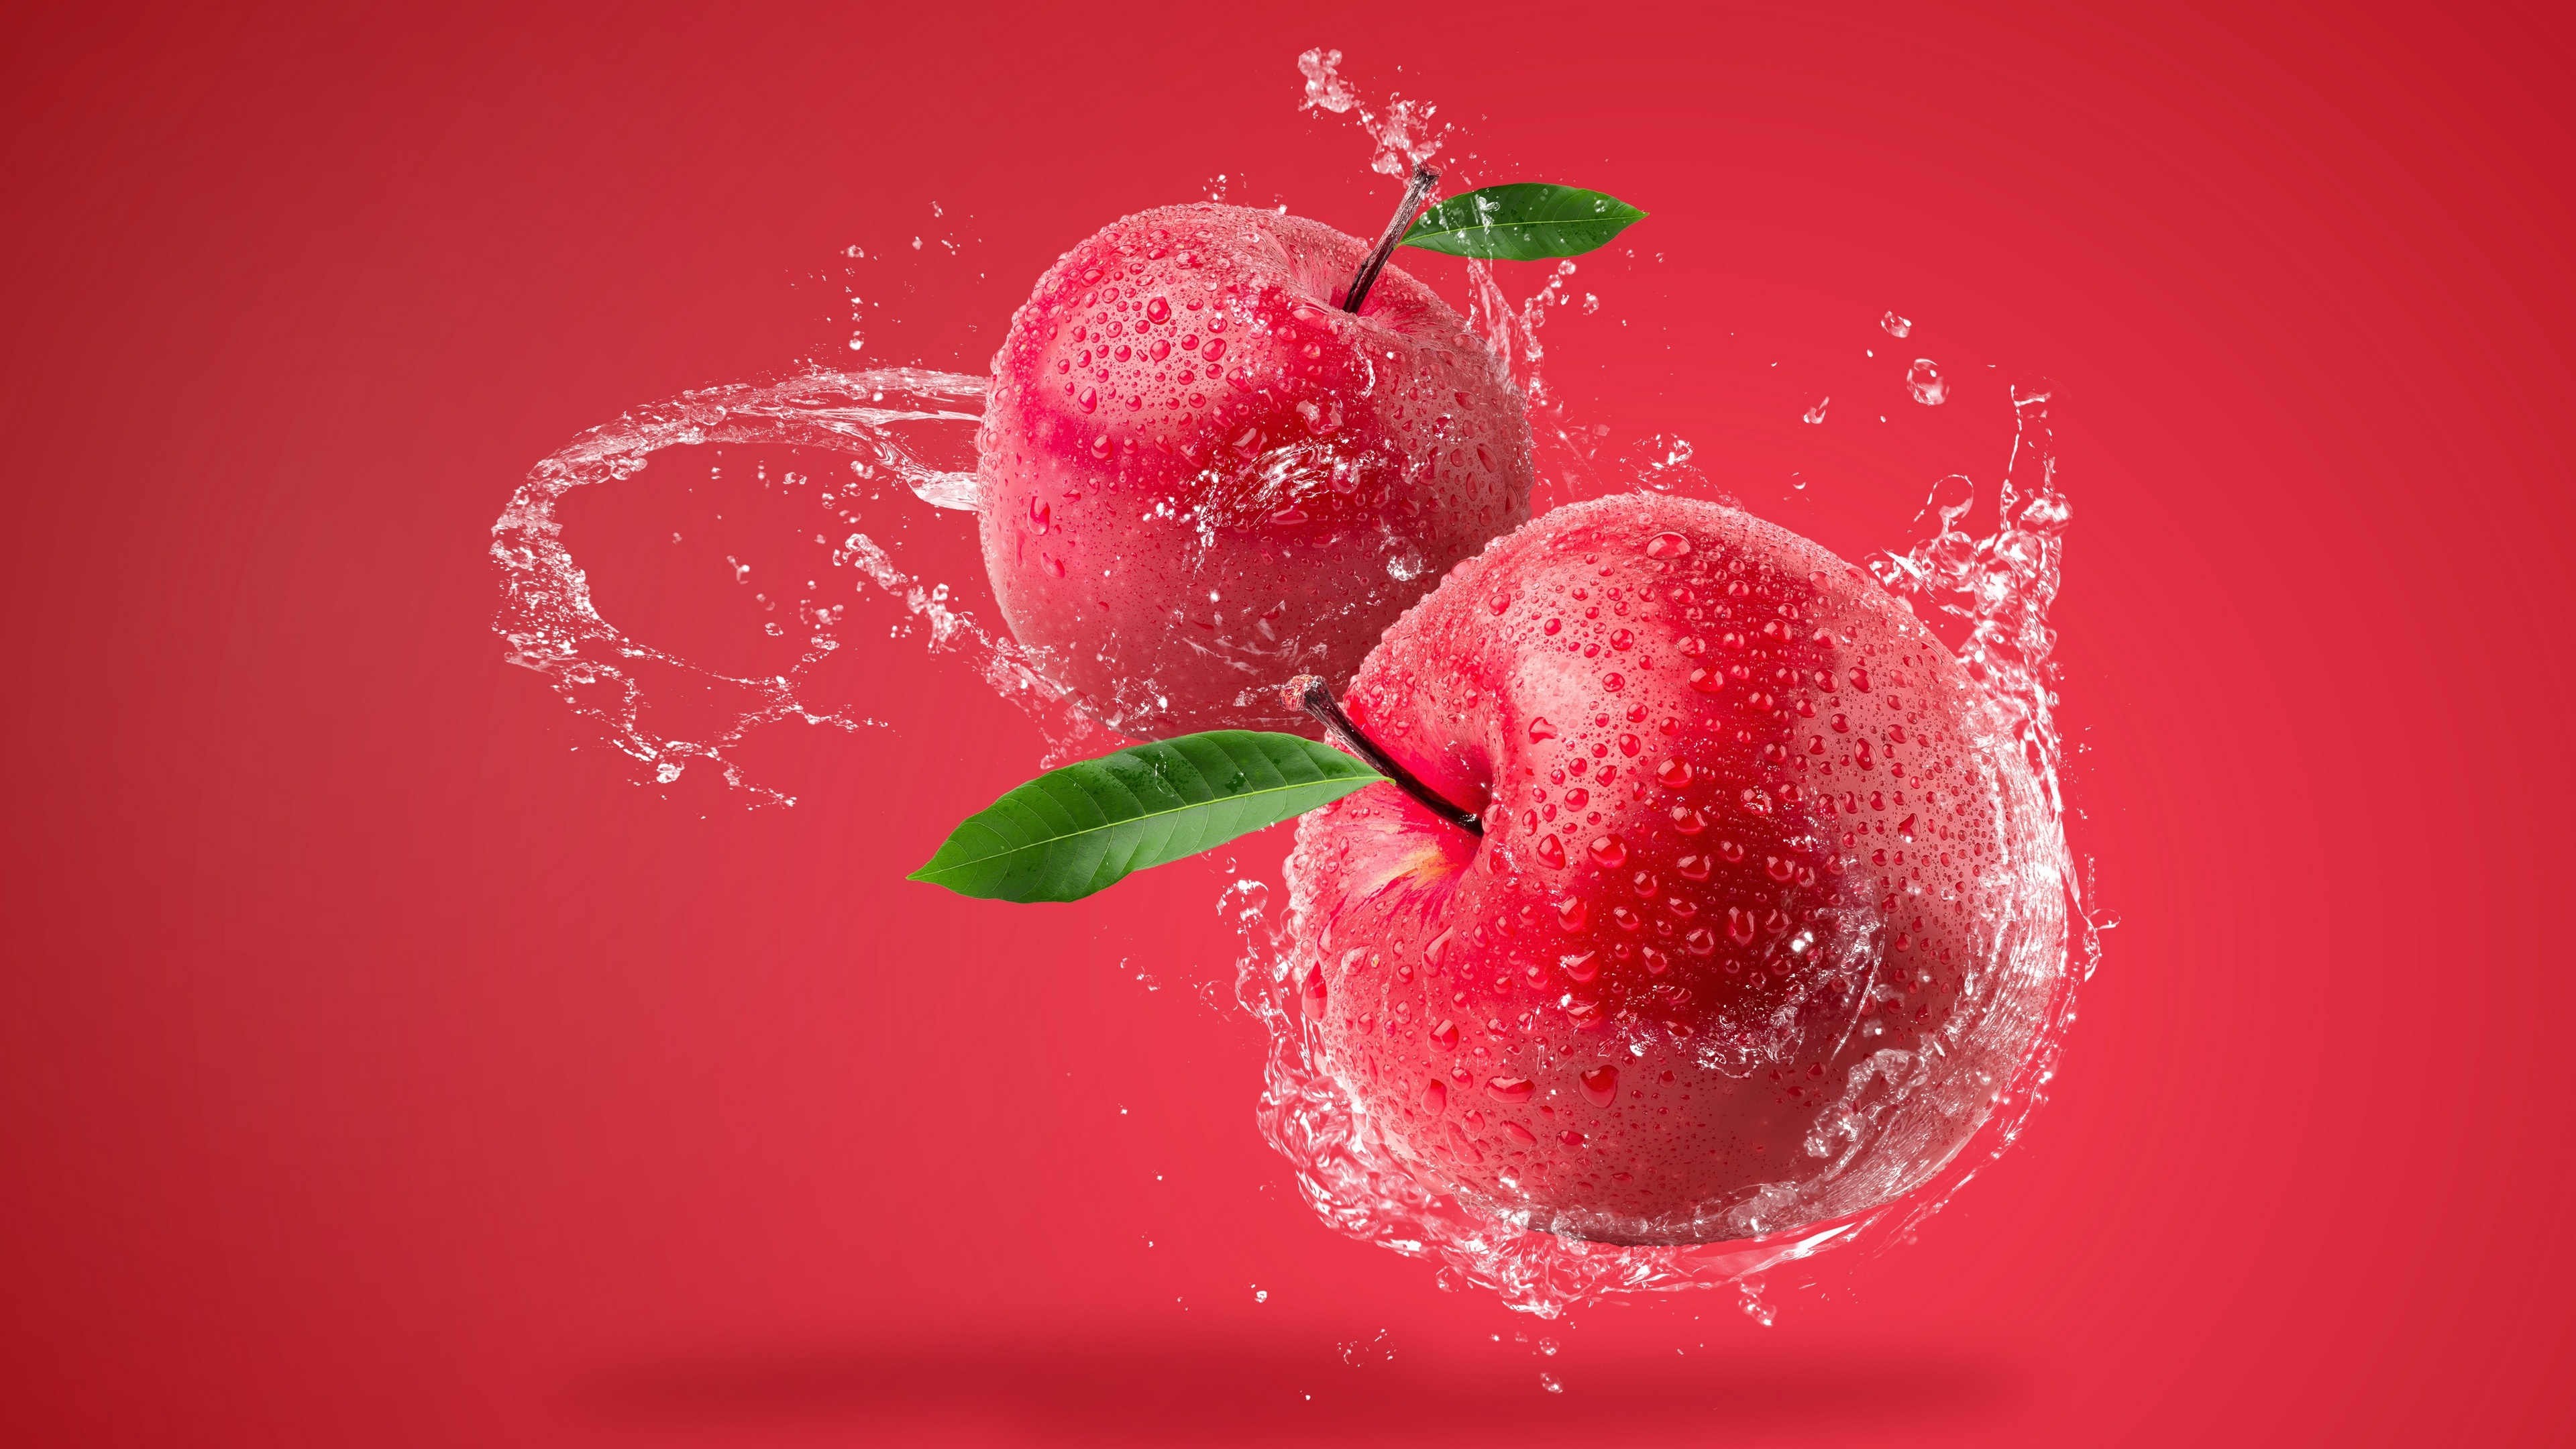 Artwork Digital Art Apples Water Water Drops Splashes Simple Background Red Background Minimalism Fr 3840x2160